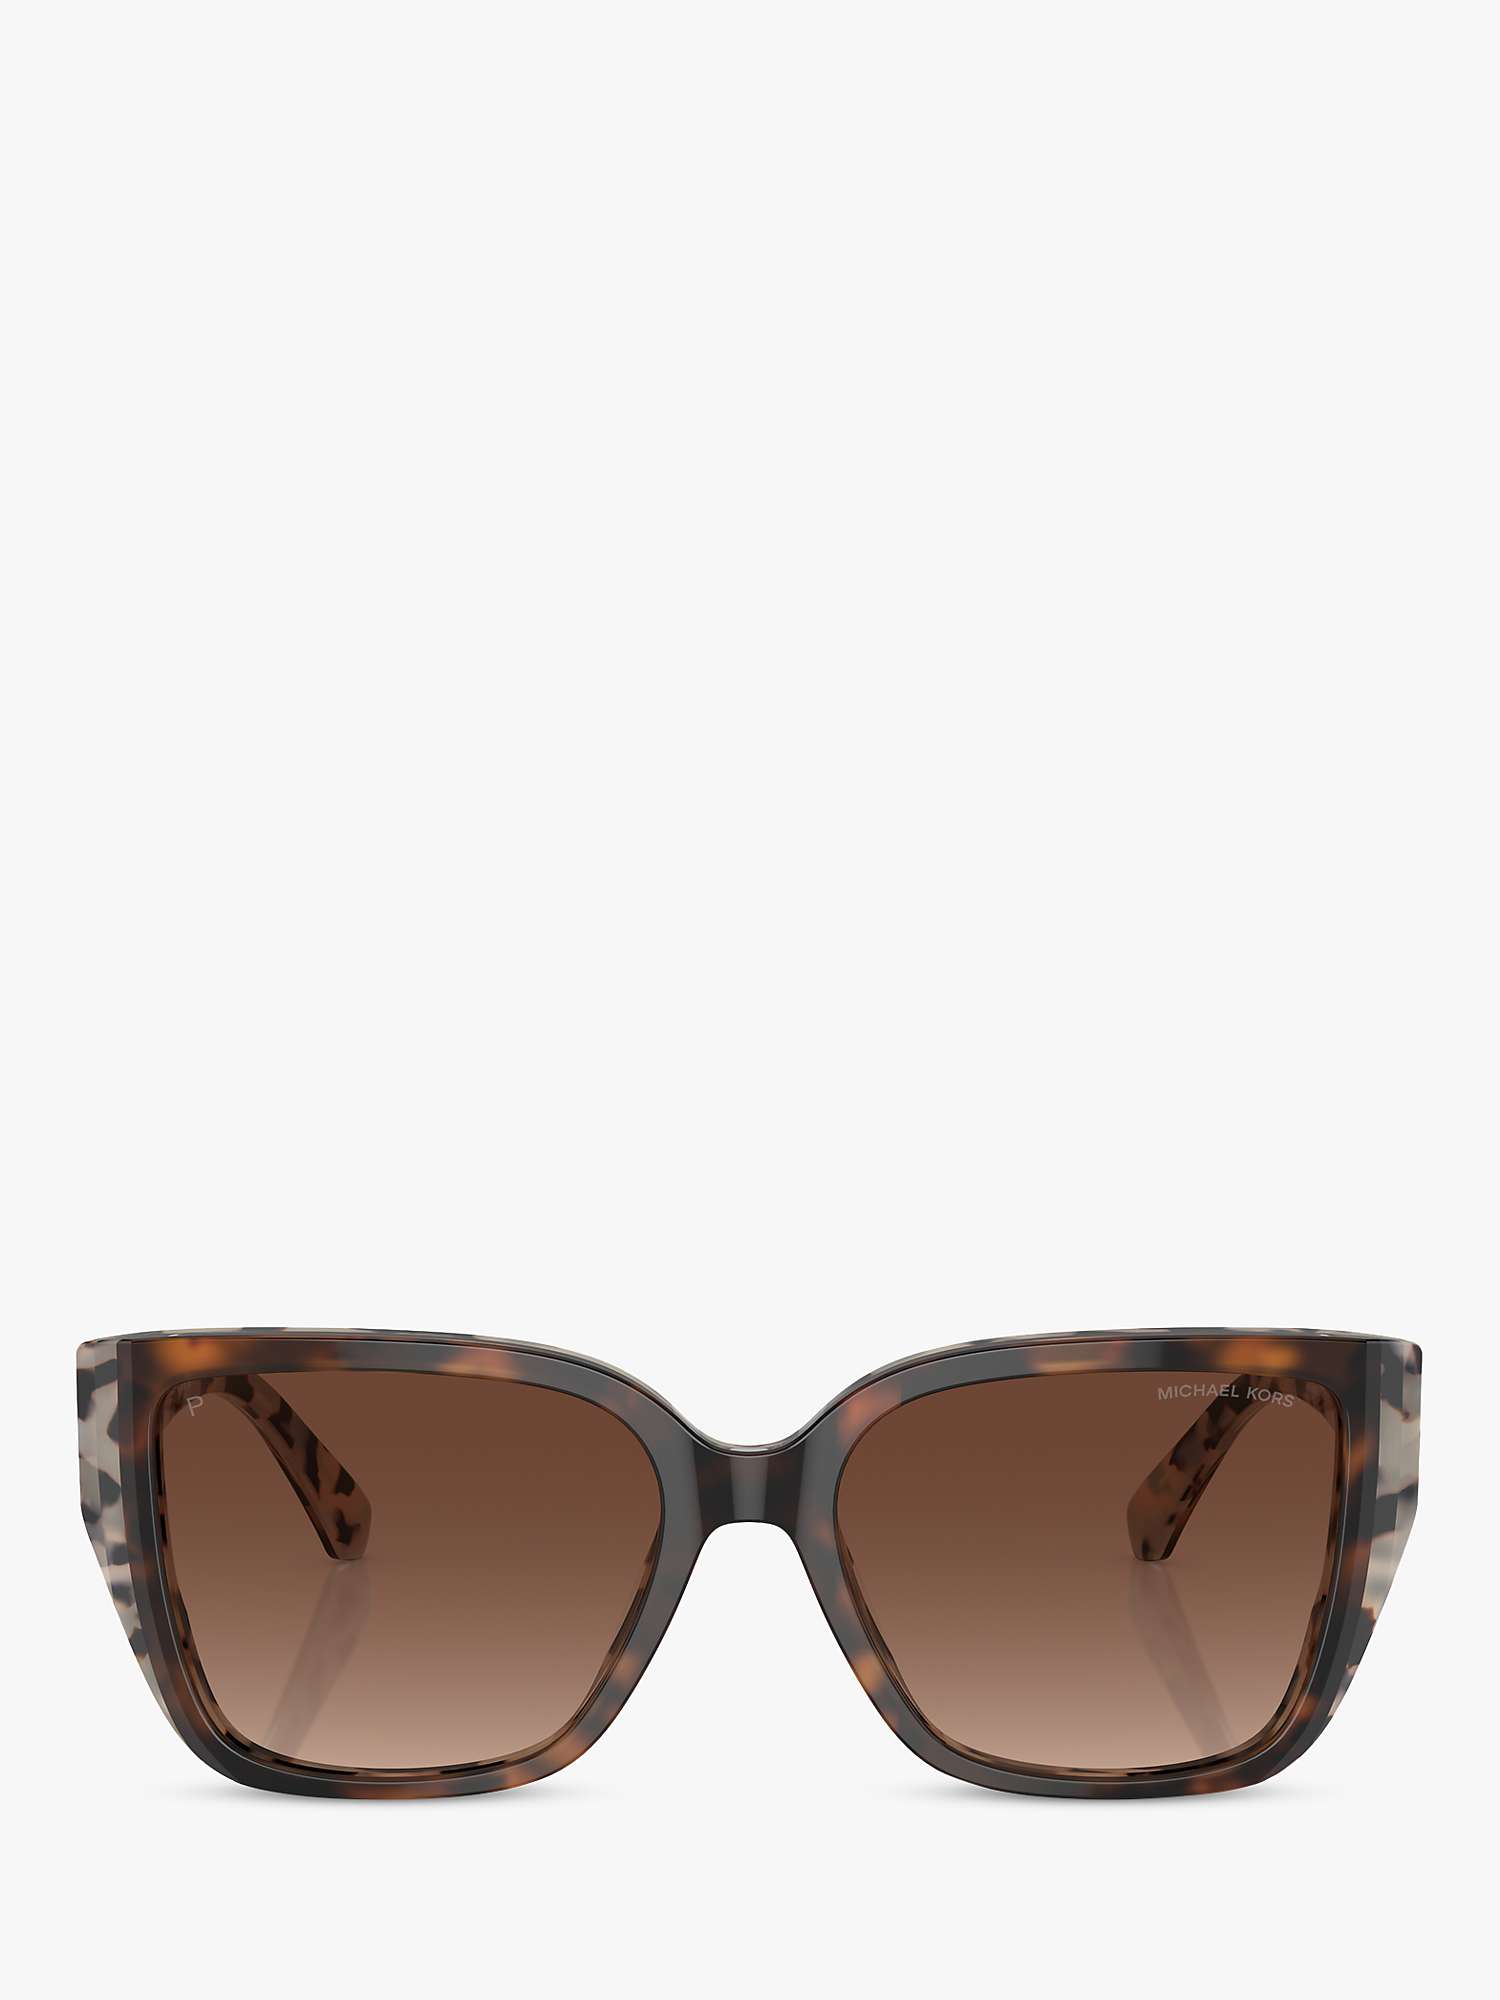 Buy Michael Kors MK2199 Women's Acadia Polarised D-Frame Sunglasses, Dark Cream Tortoise/Brown Gradient Online at johnlewis.com